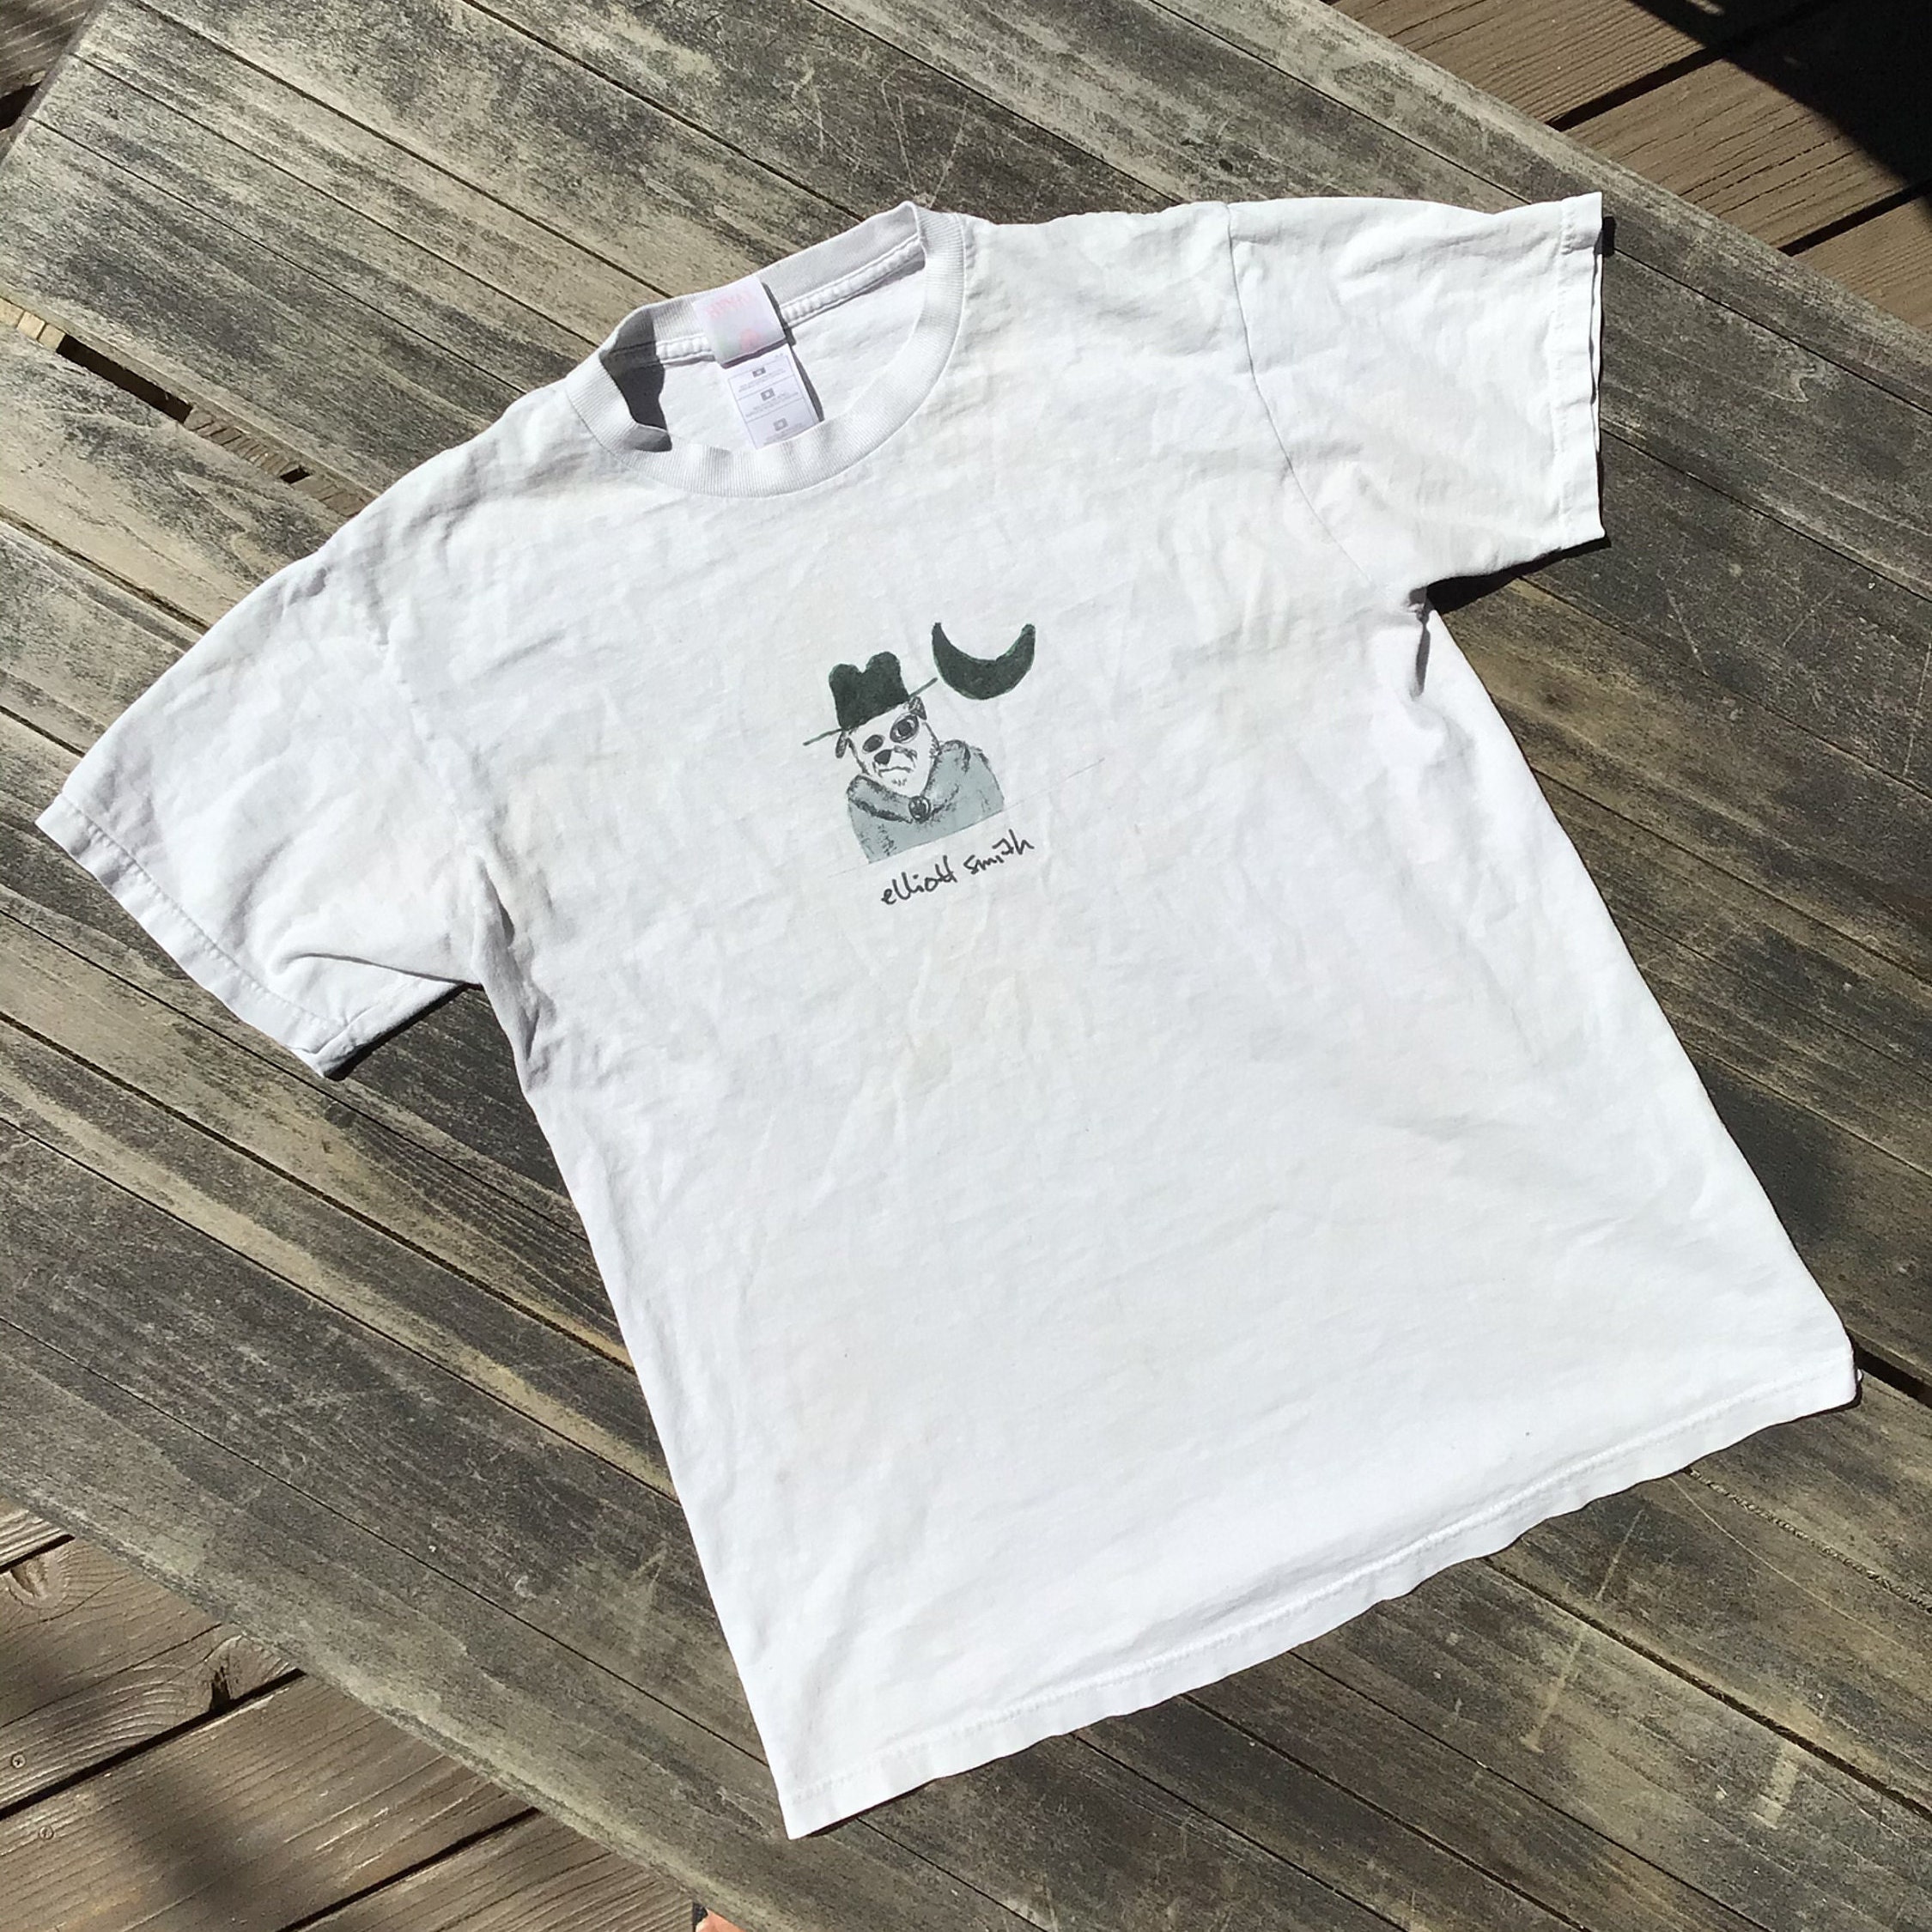 Elliott Smith figuur 8 organisch T-shirt voor kinderen Kleding Unisex kinderkleding Unisex babykleding Tops 